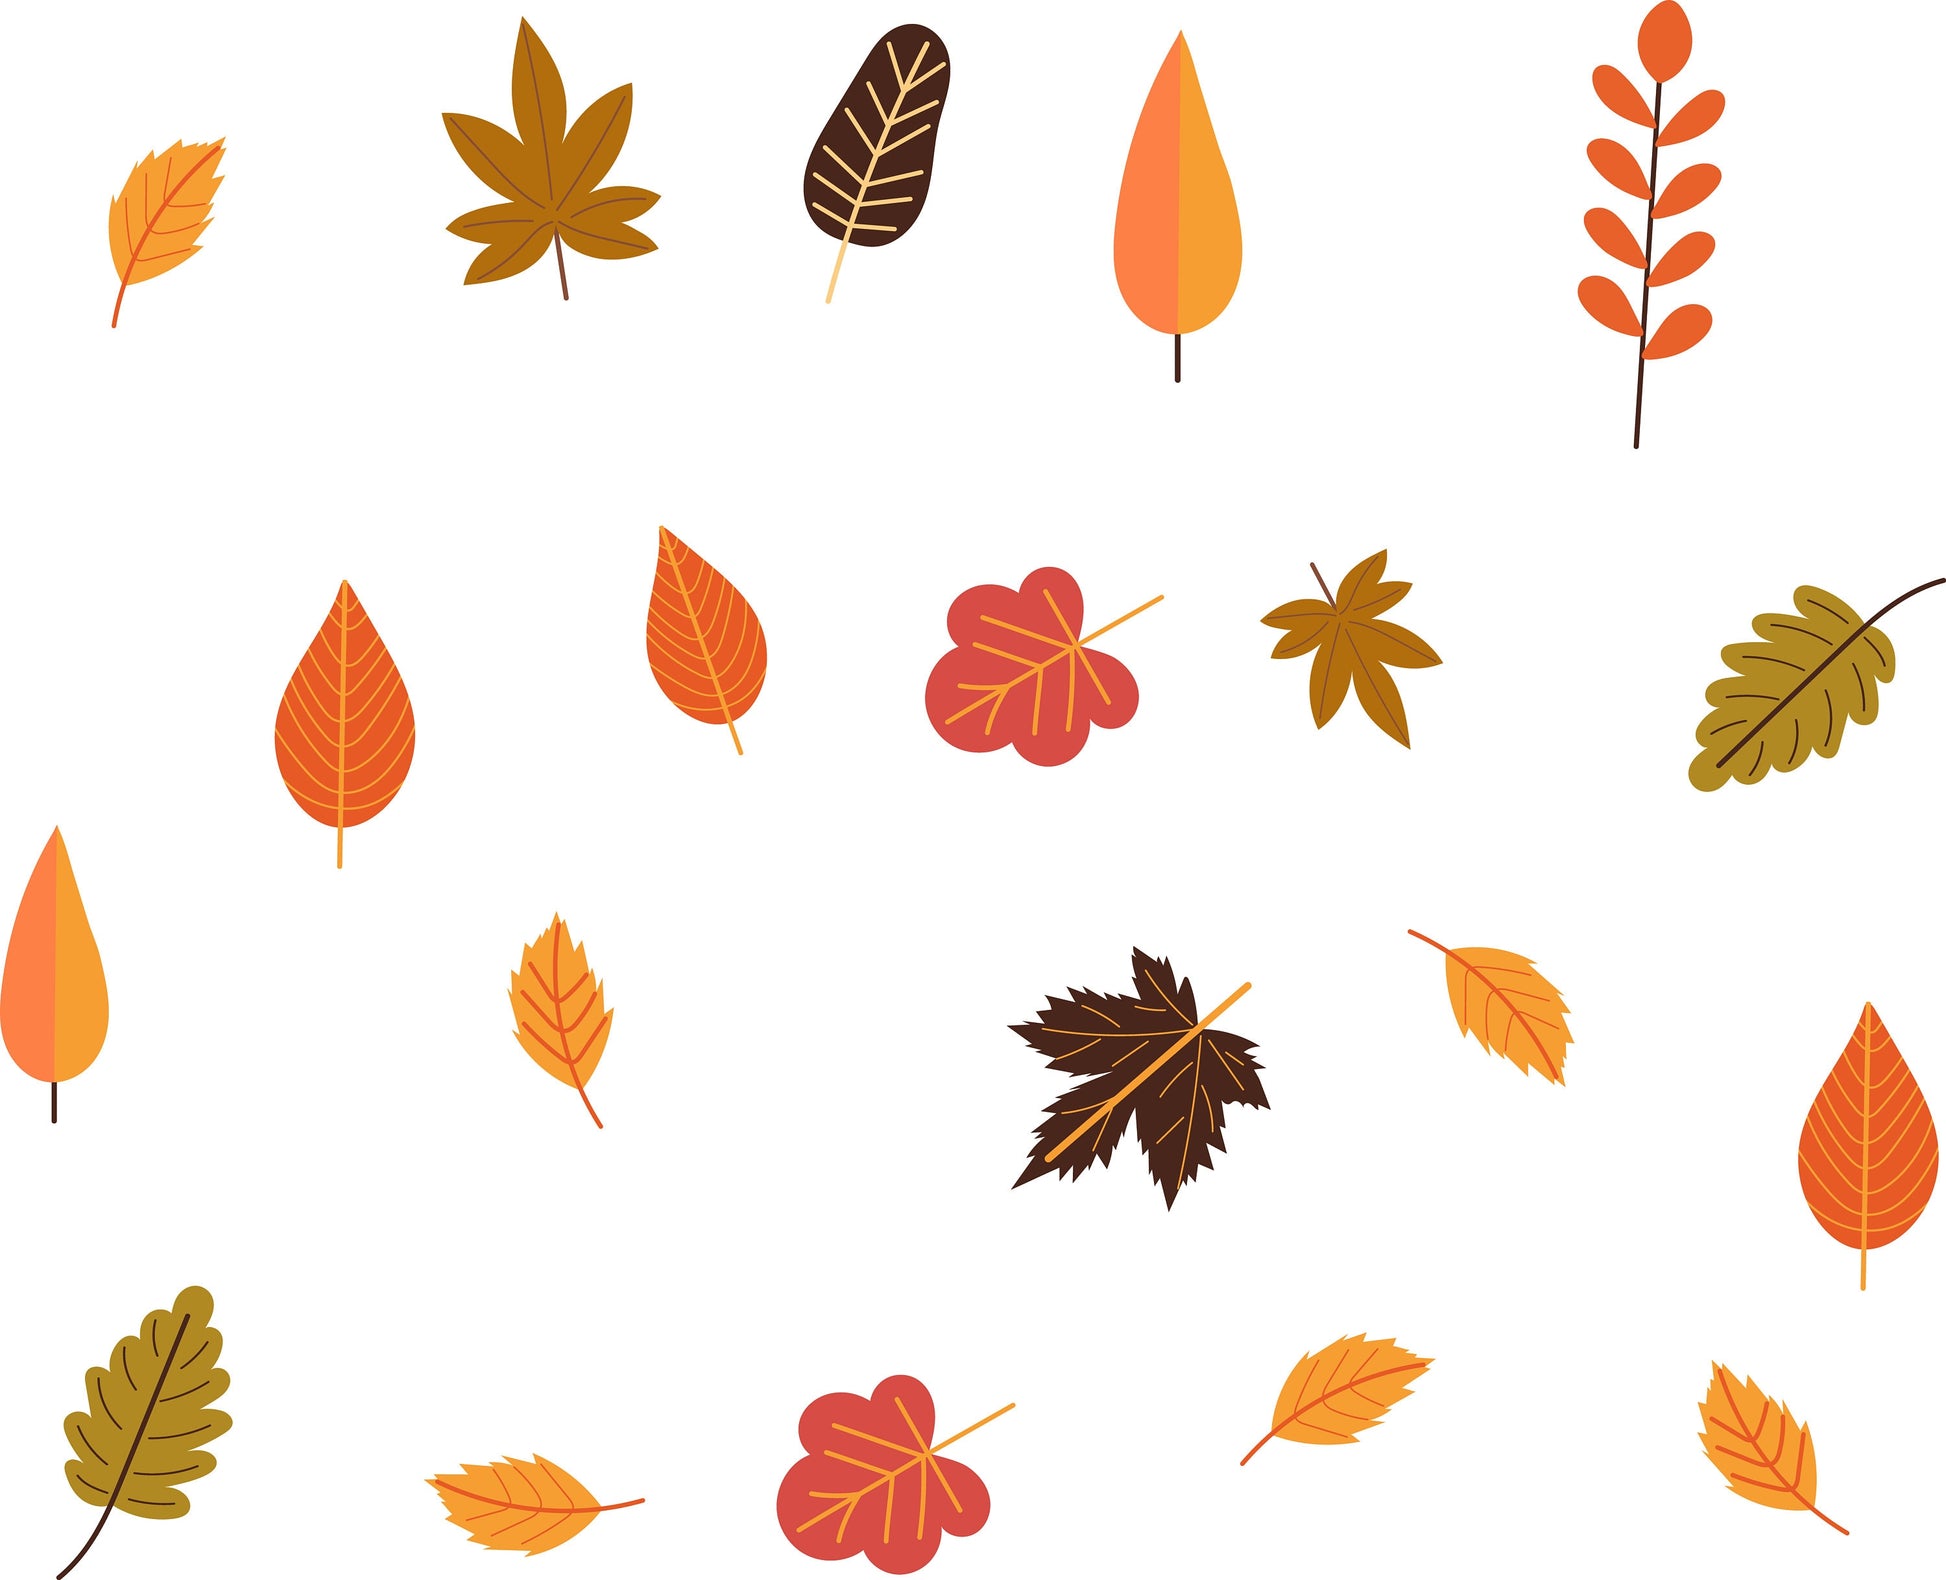 20 Autumn Leaves Window Decal Stickers, Autumn Decor, Shop Window Autumn Display Stickers